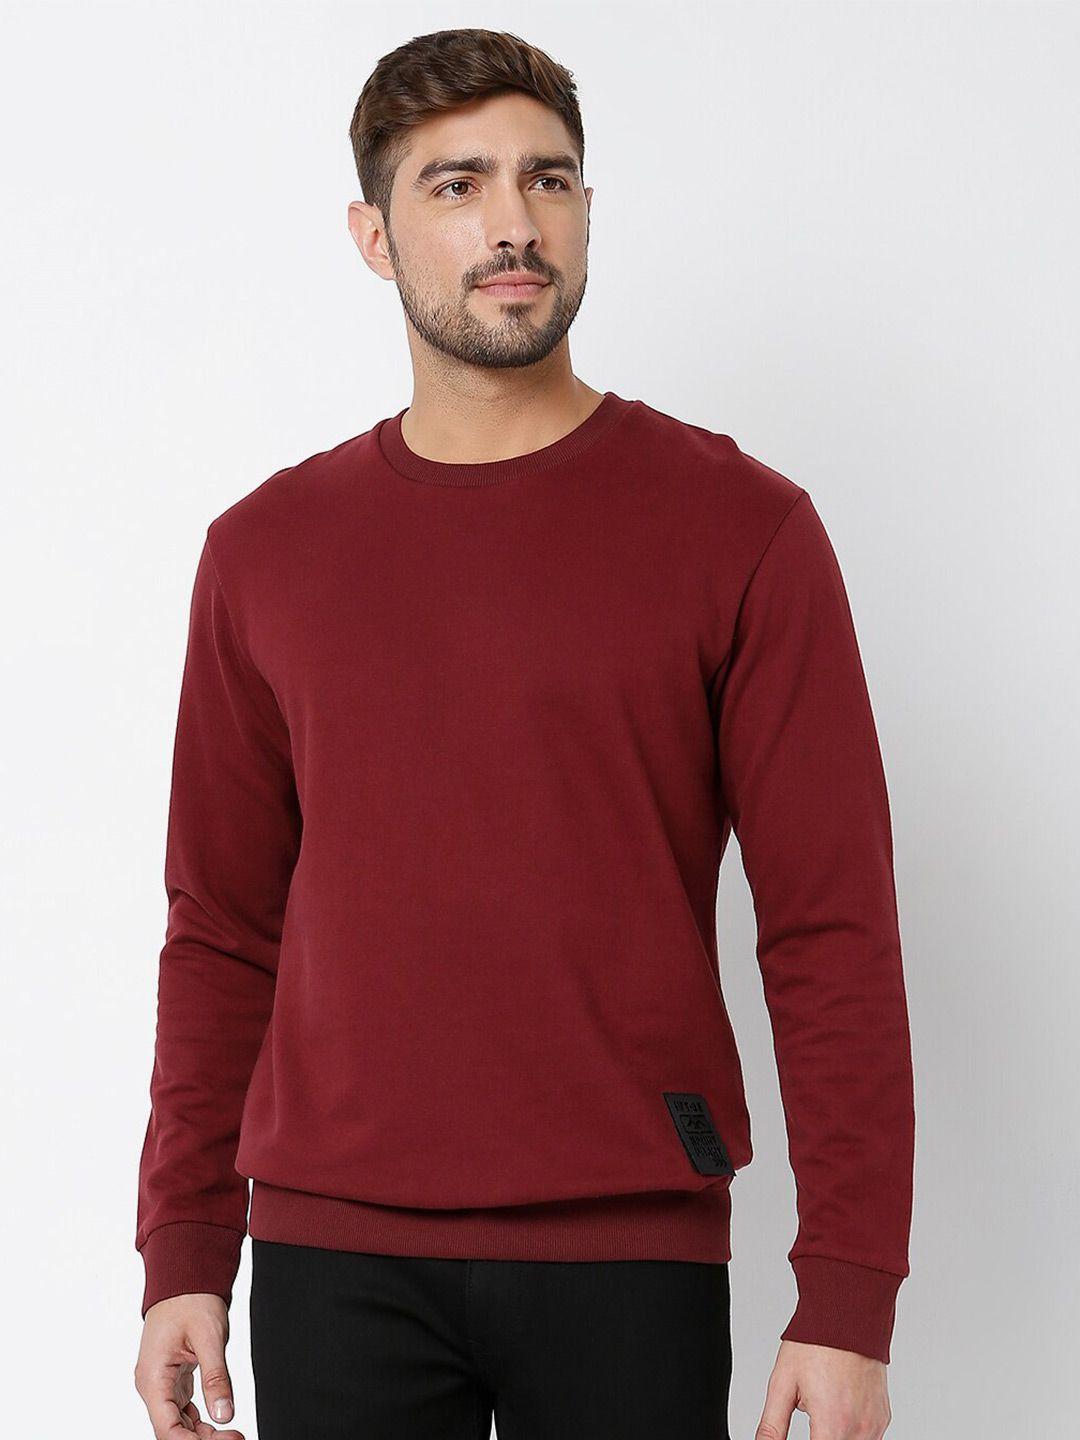 mufti-slim-fit-full-sleeves-pure-cotton-sweatshirt